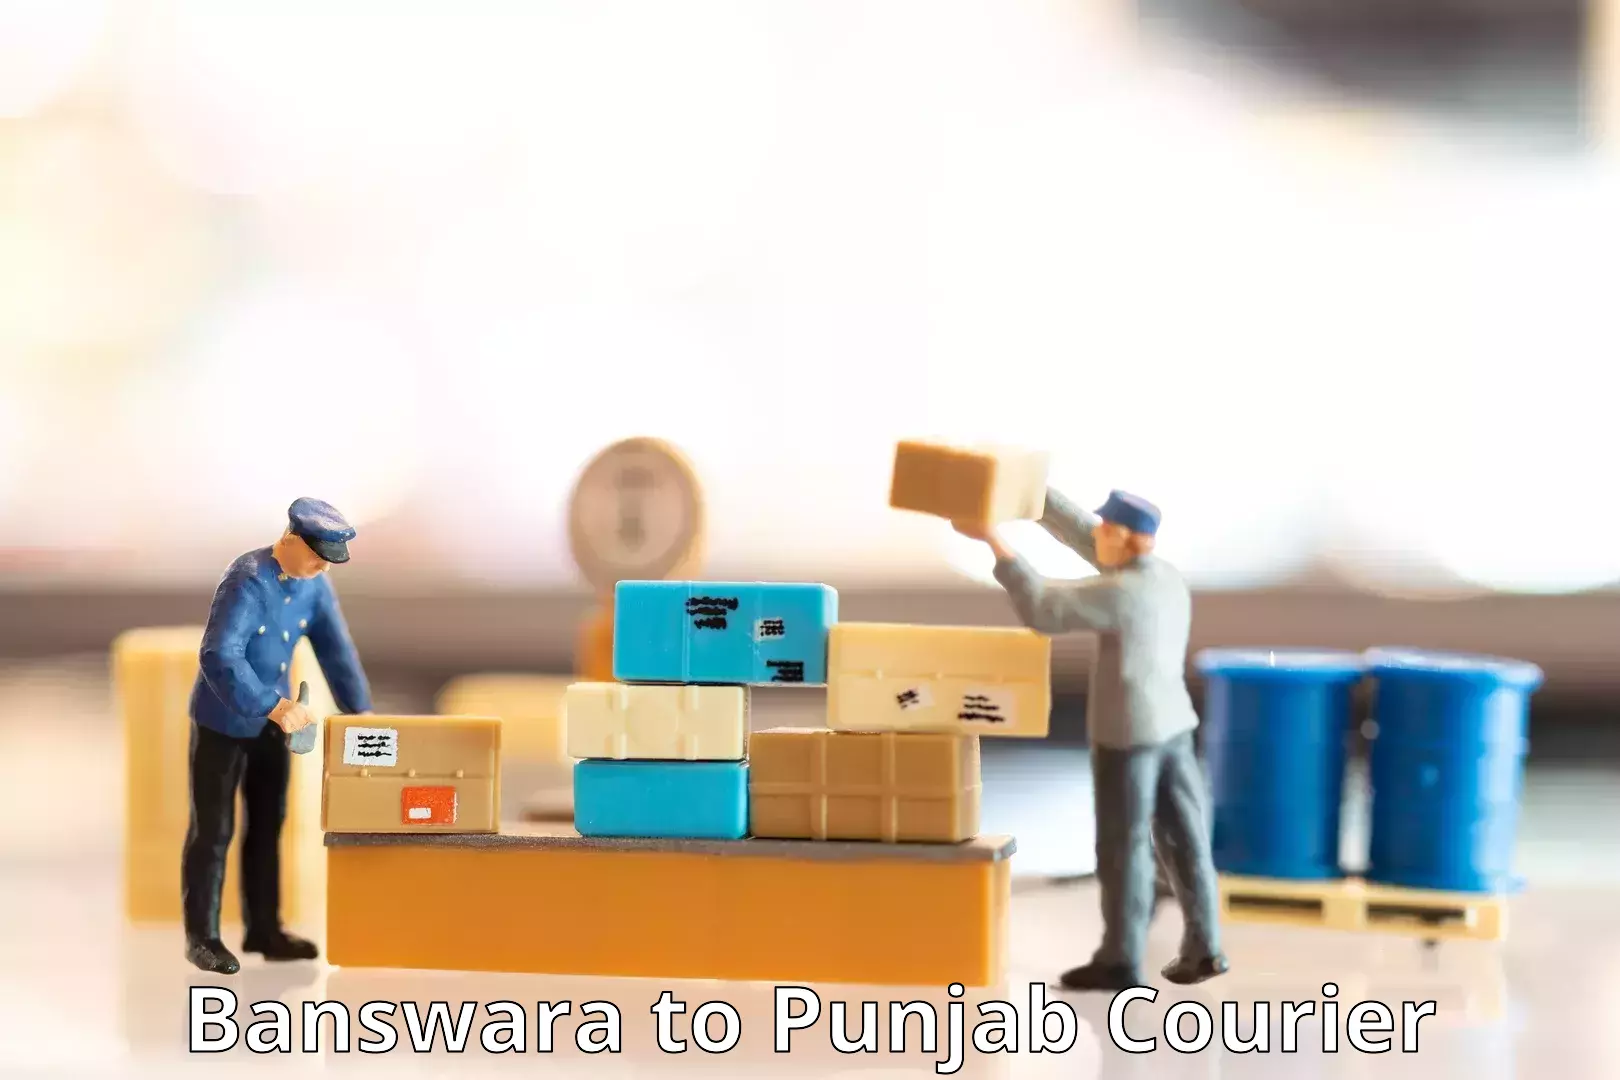 State-of-the-art courier technology Banswara to Punjab